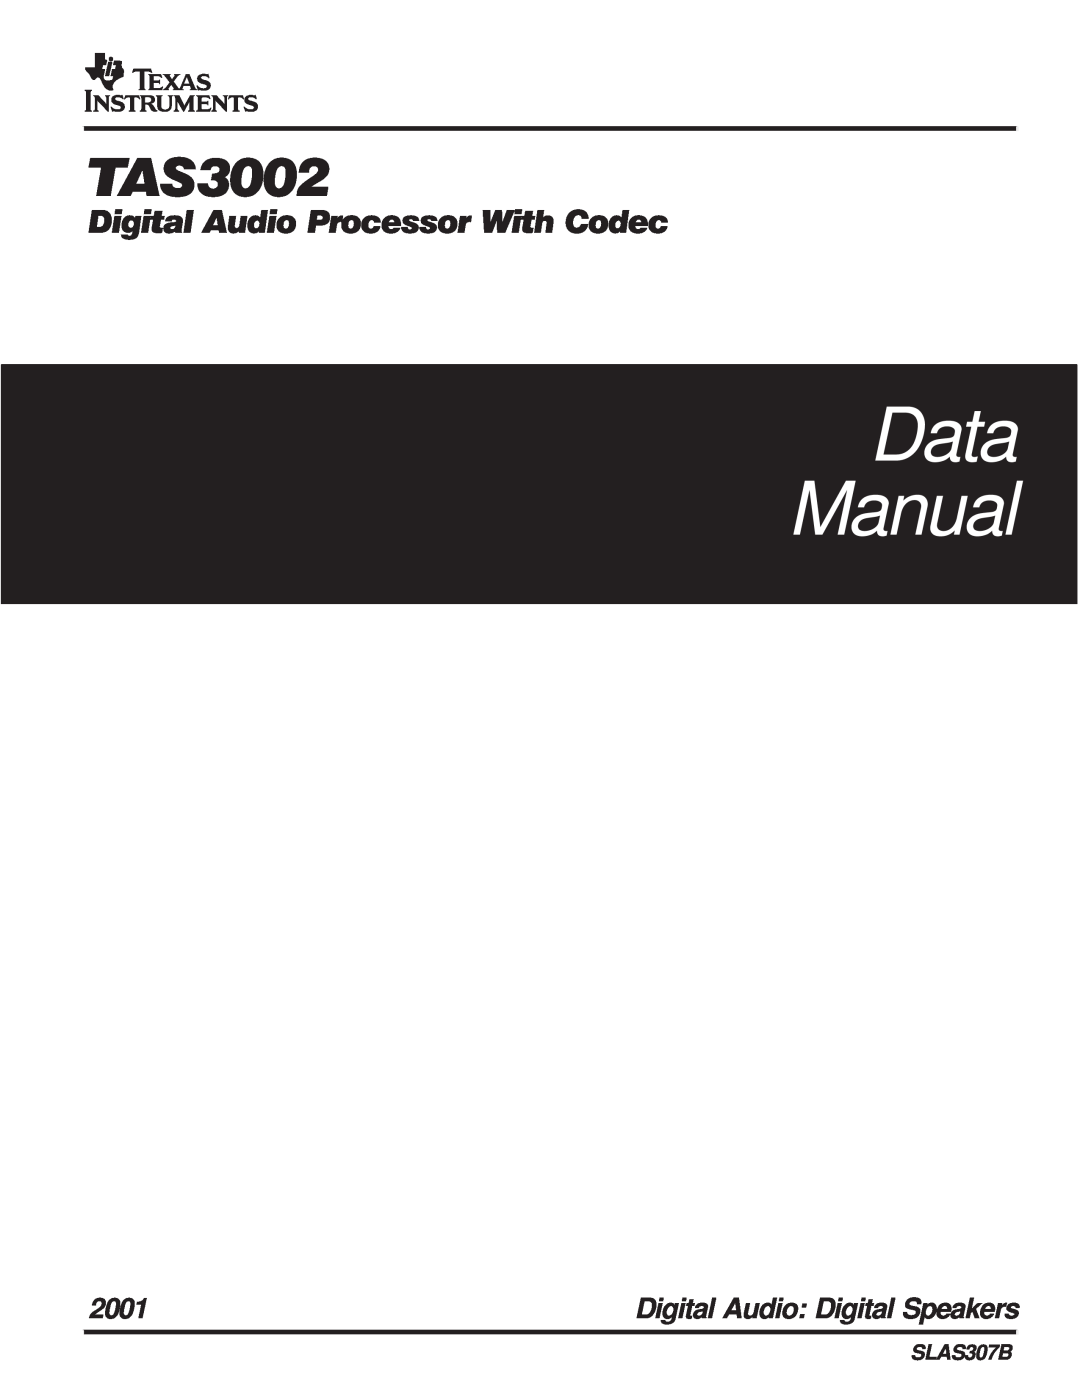 Texas Instruments TAS3002 manual Data Manual, Digital Audio Processor With Codec, 2001, Digital Audio Digital Speakers 